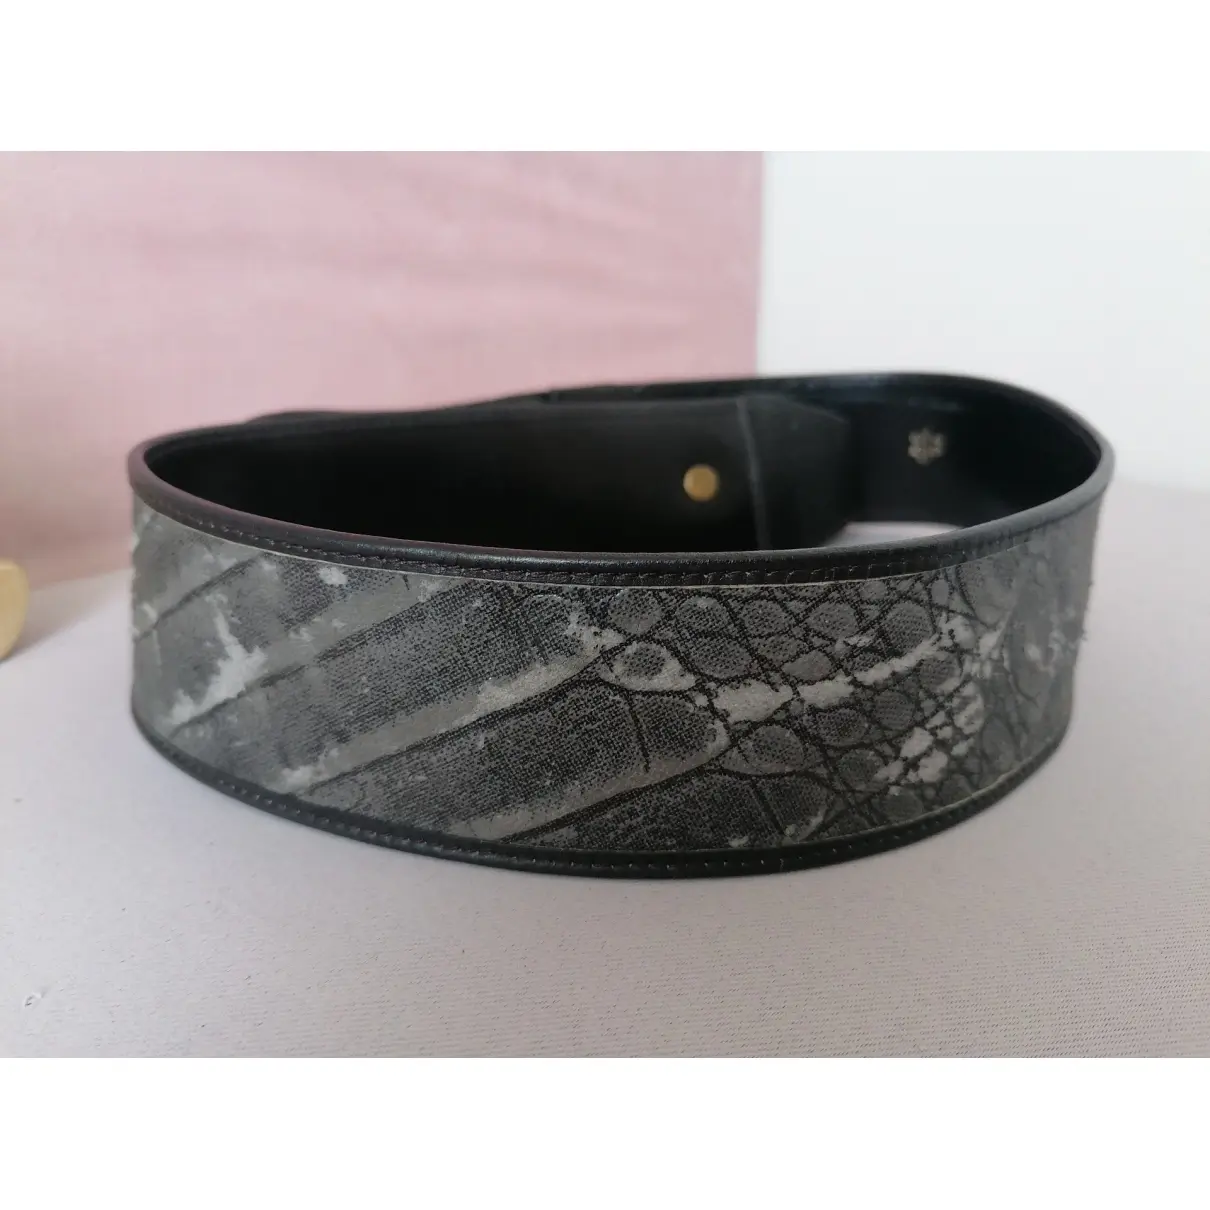 Buy Aigner Leather belt online